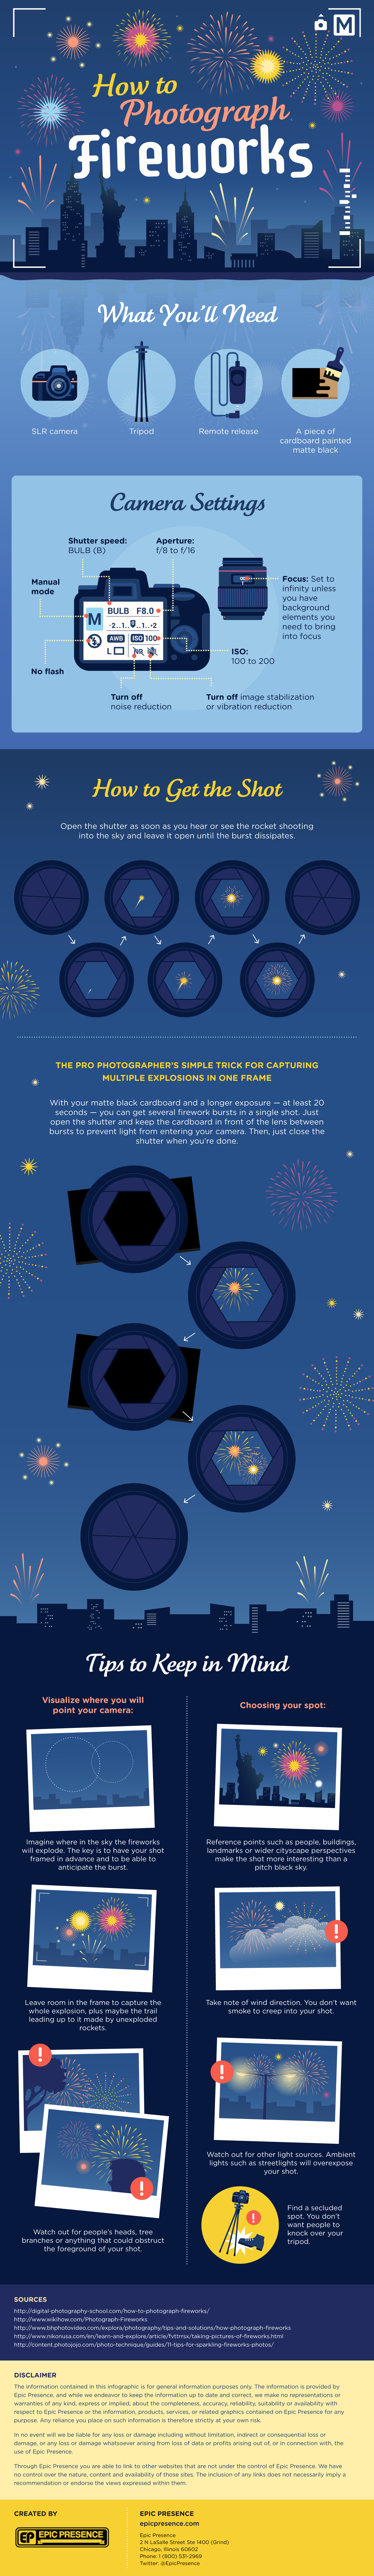 how-photograph-fireworks